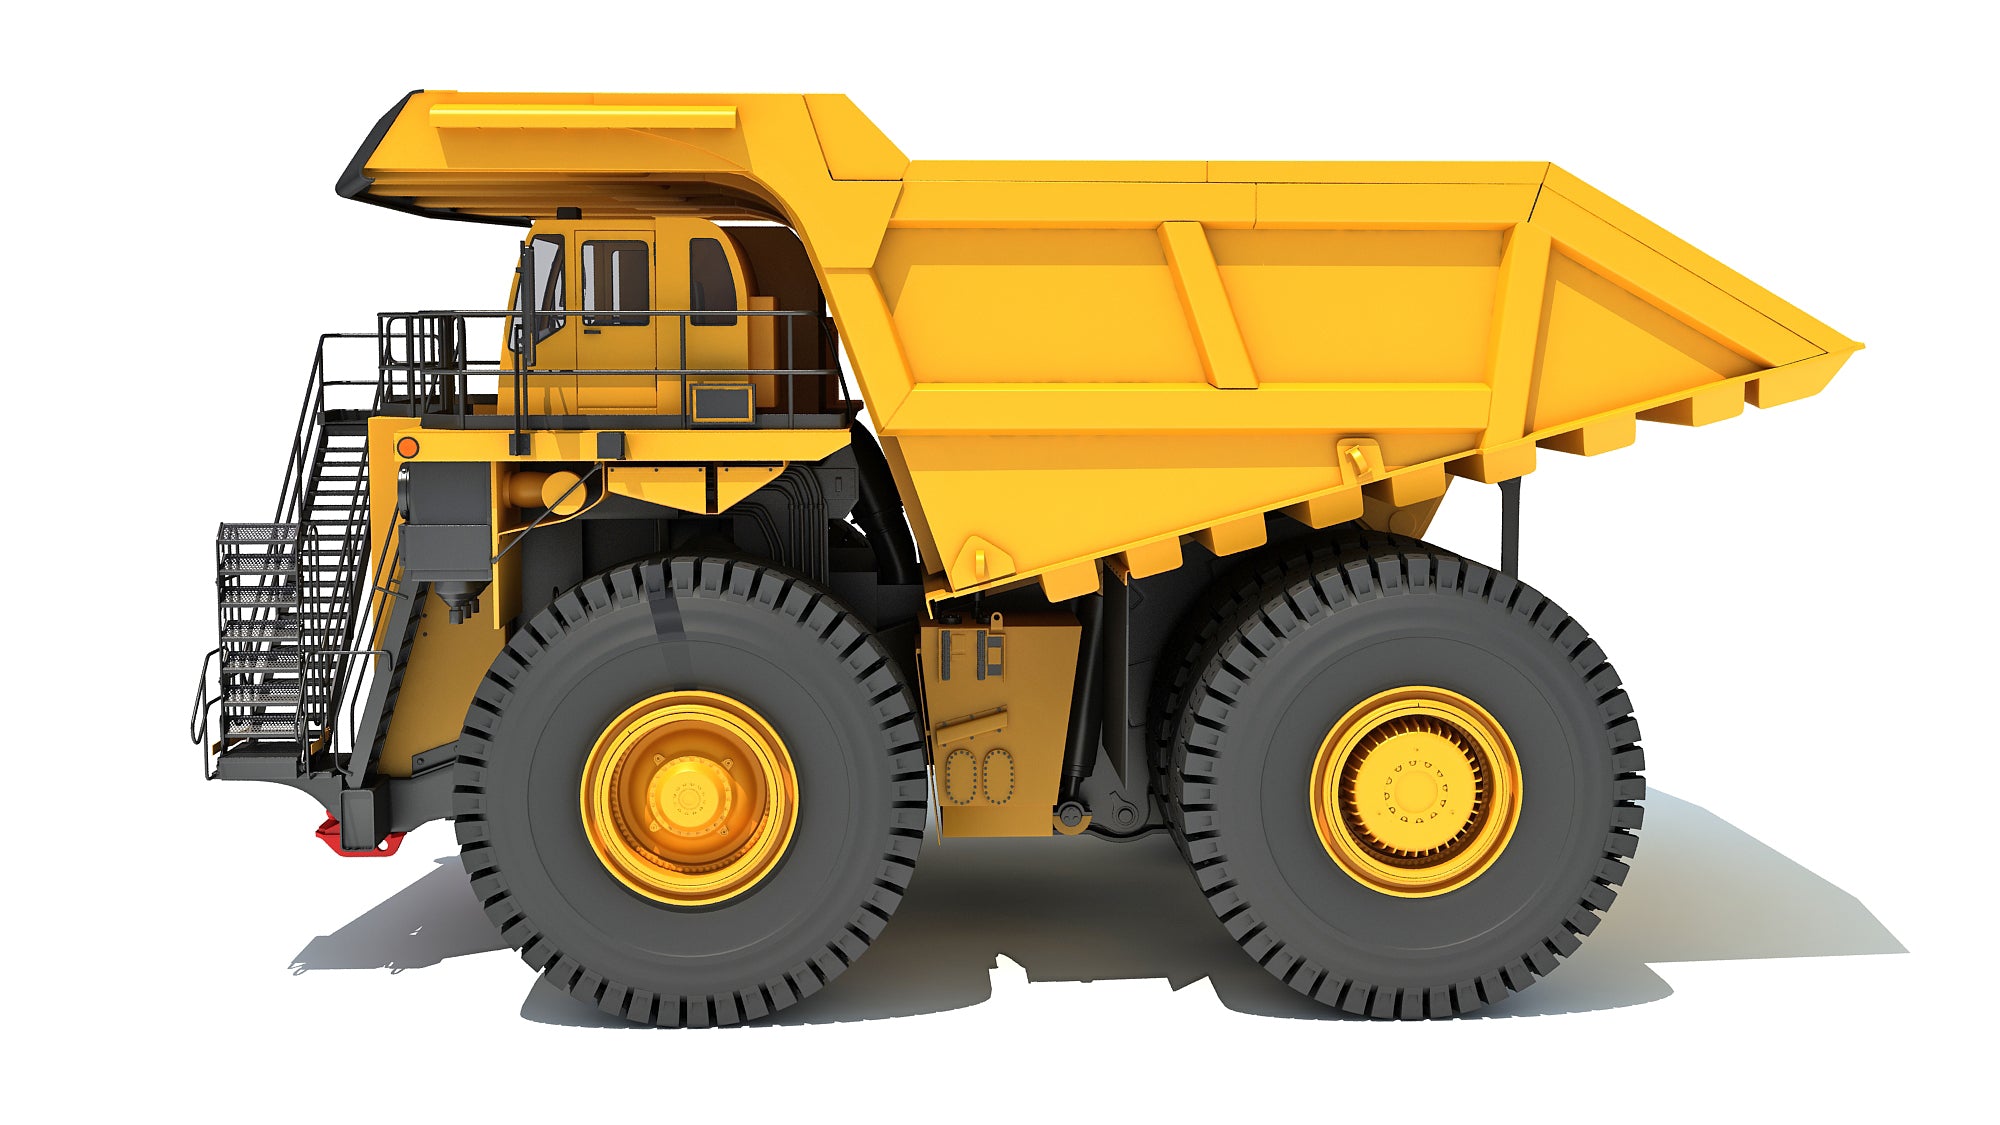 CAT Off Highway Mining Dump Truck